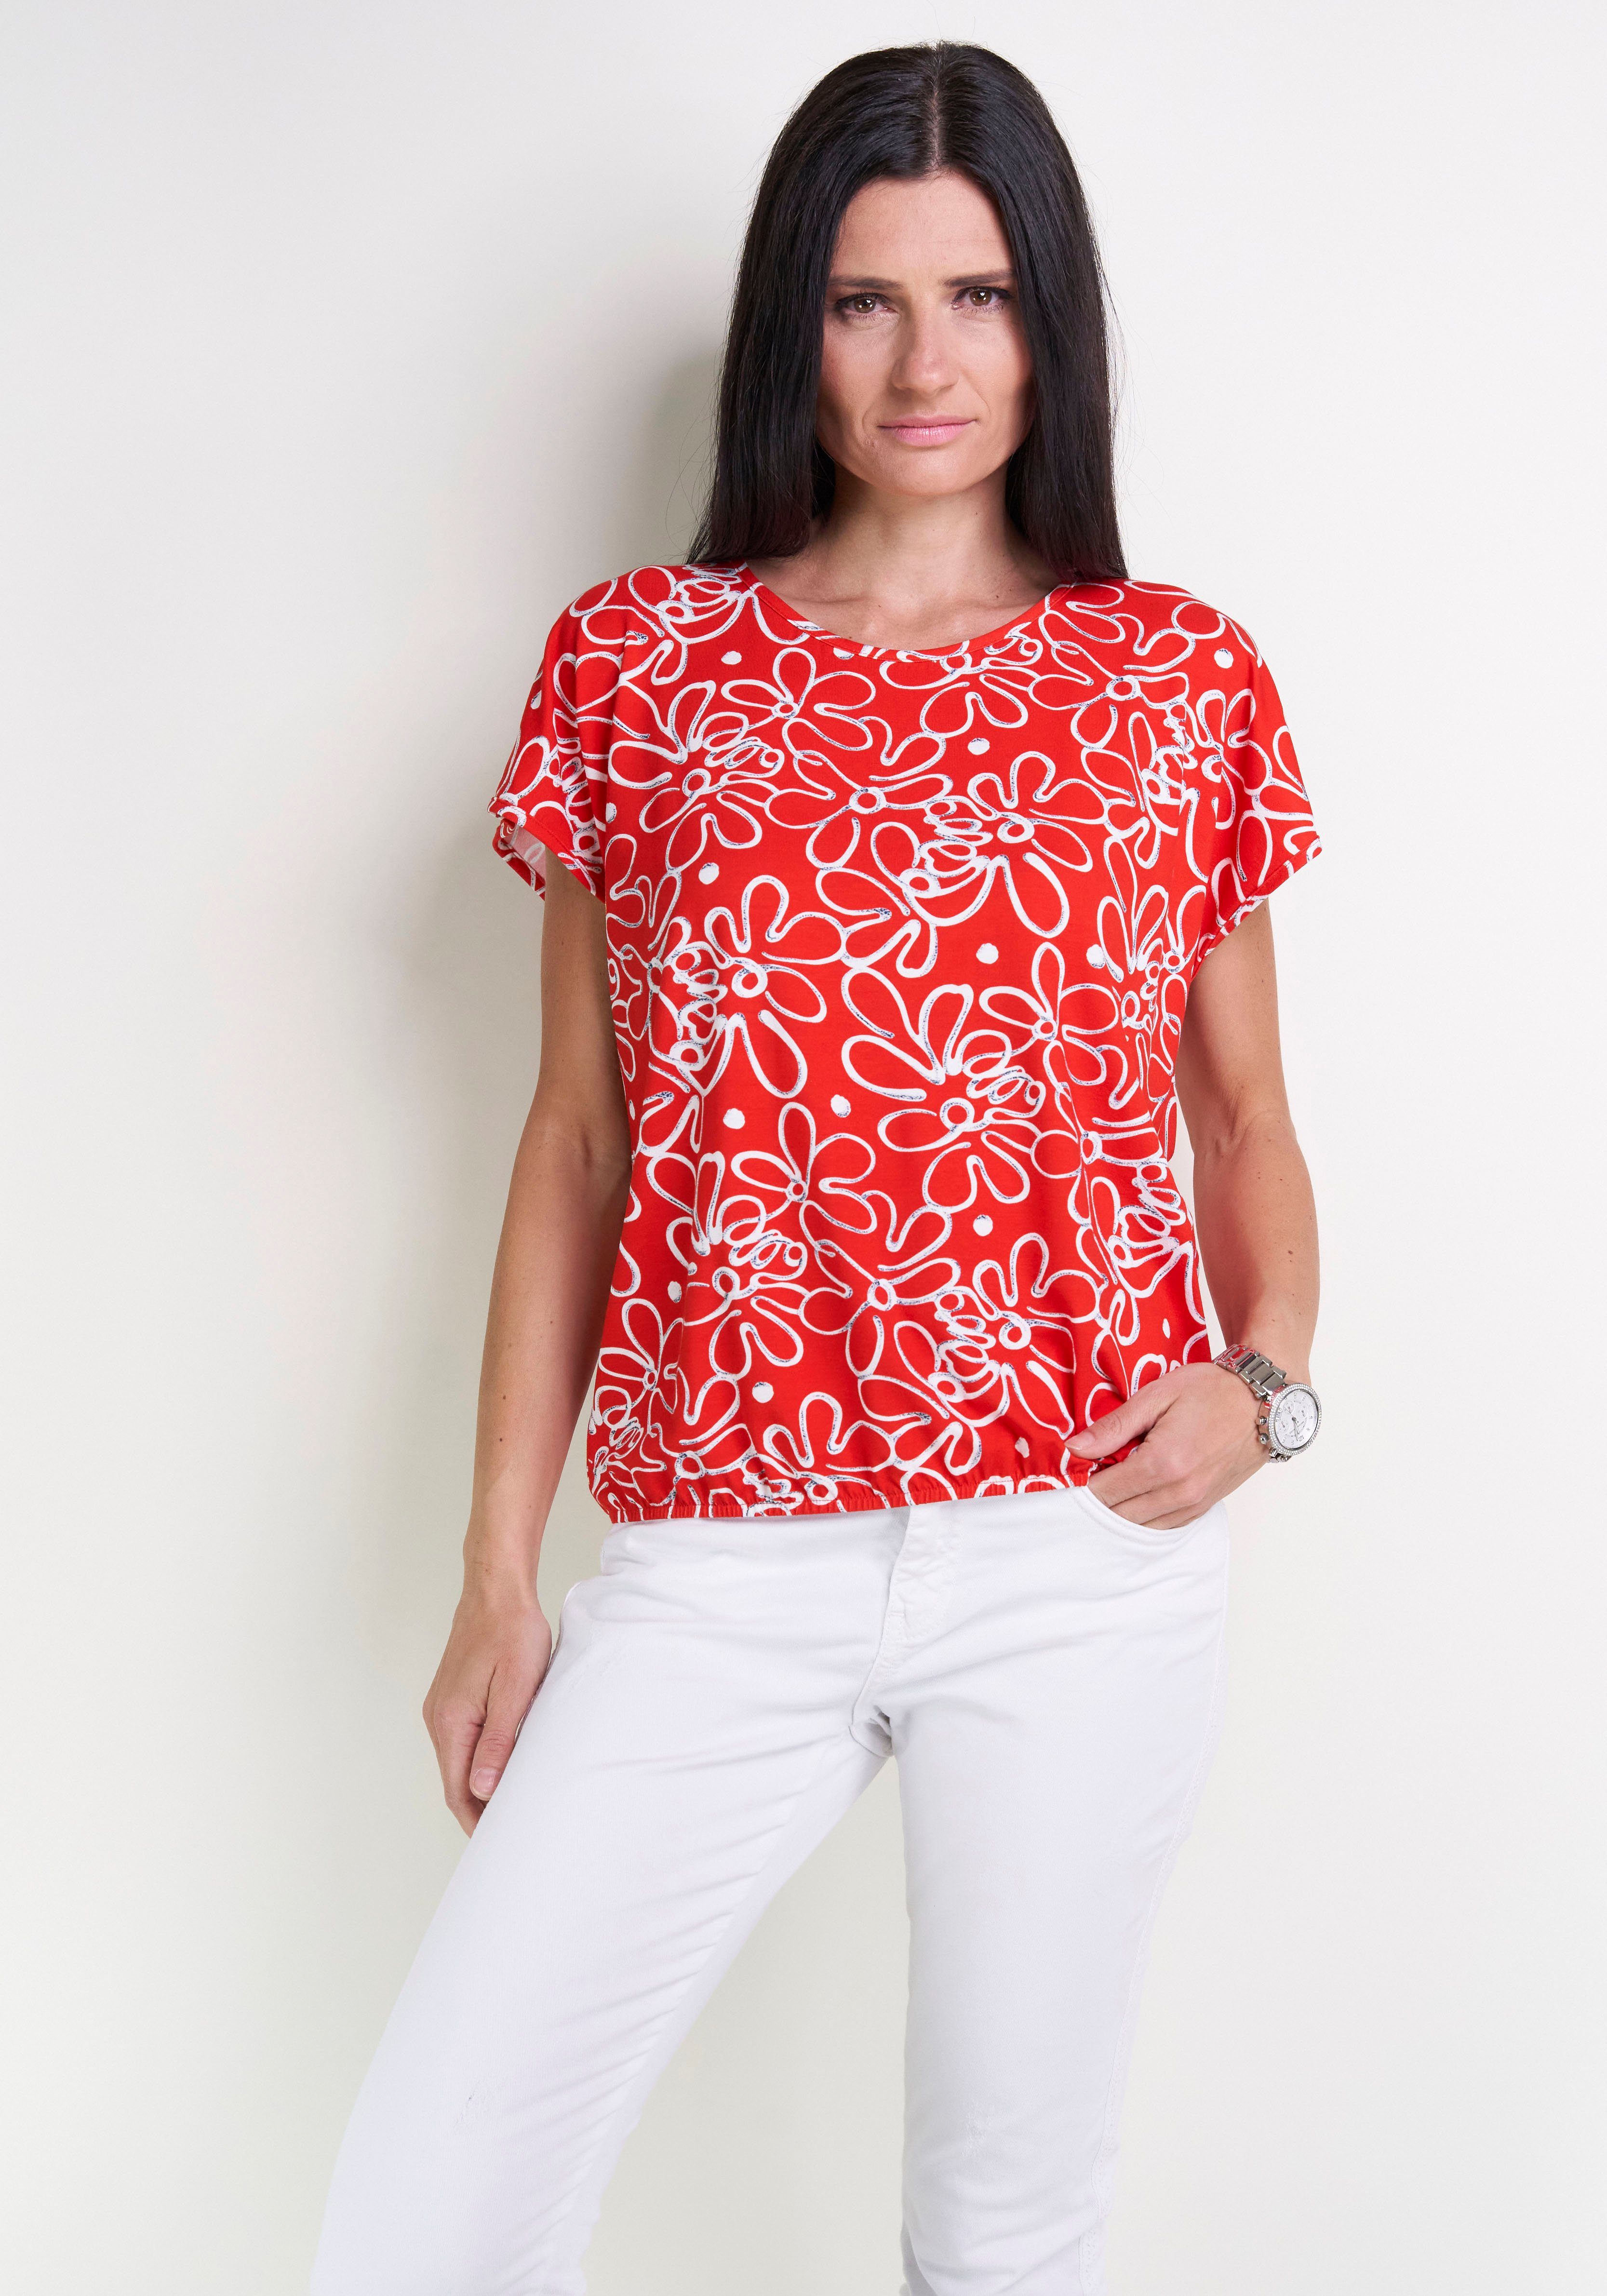 Seidel Moden Print-Shirt mit floralem Druck und Elastik im Saum, MADE IN GERMANY | T-Shirts